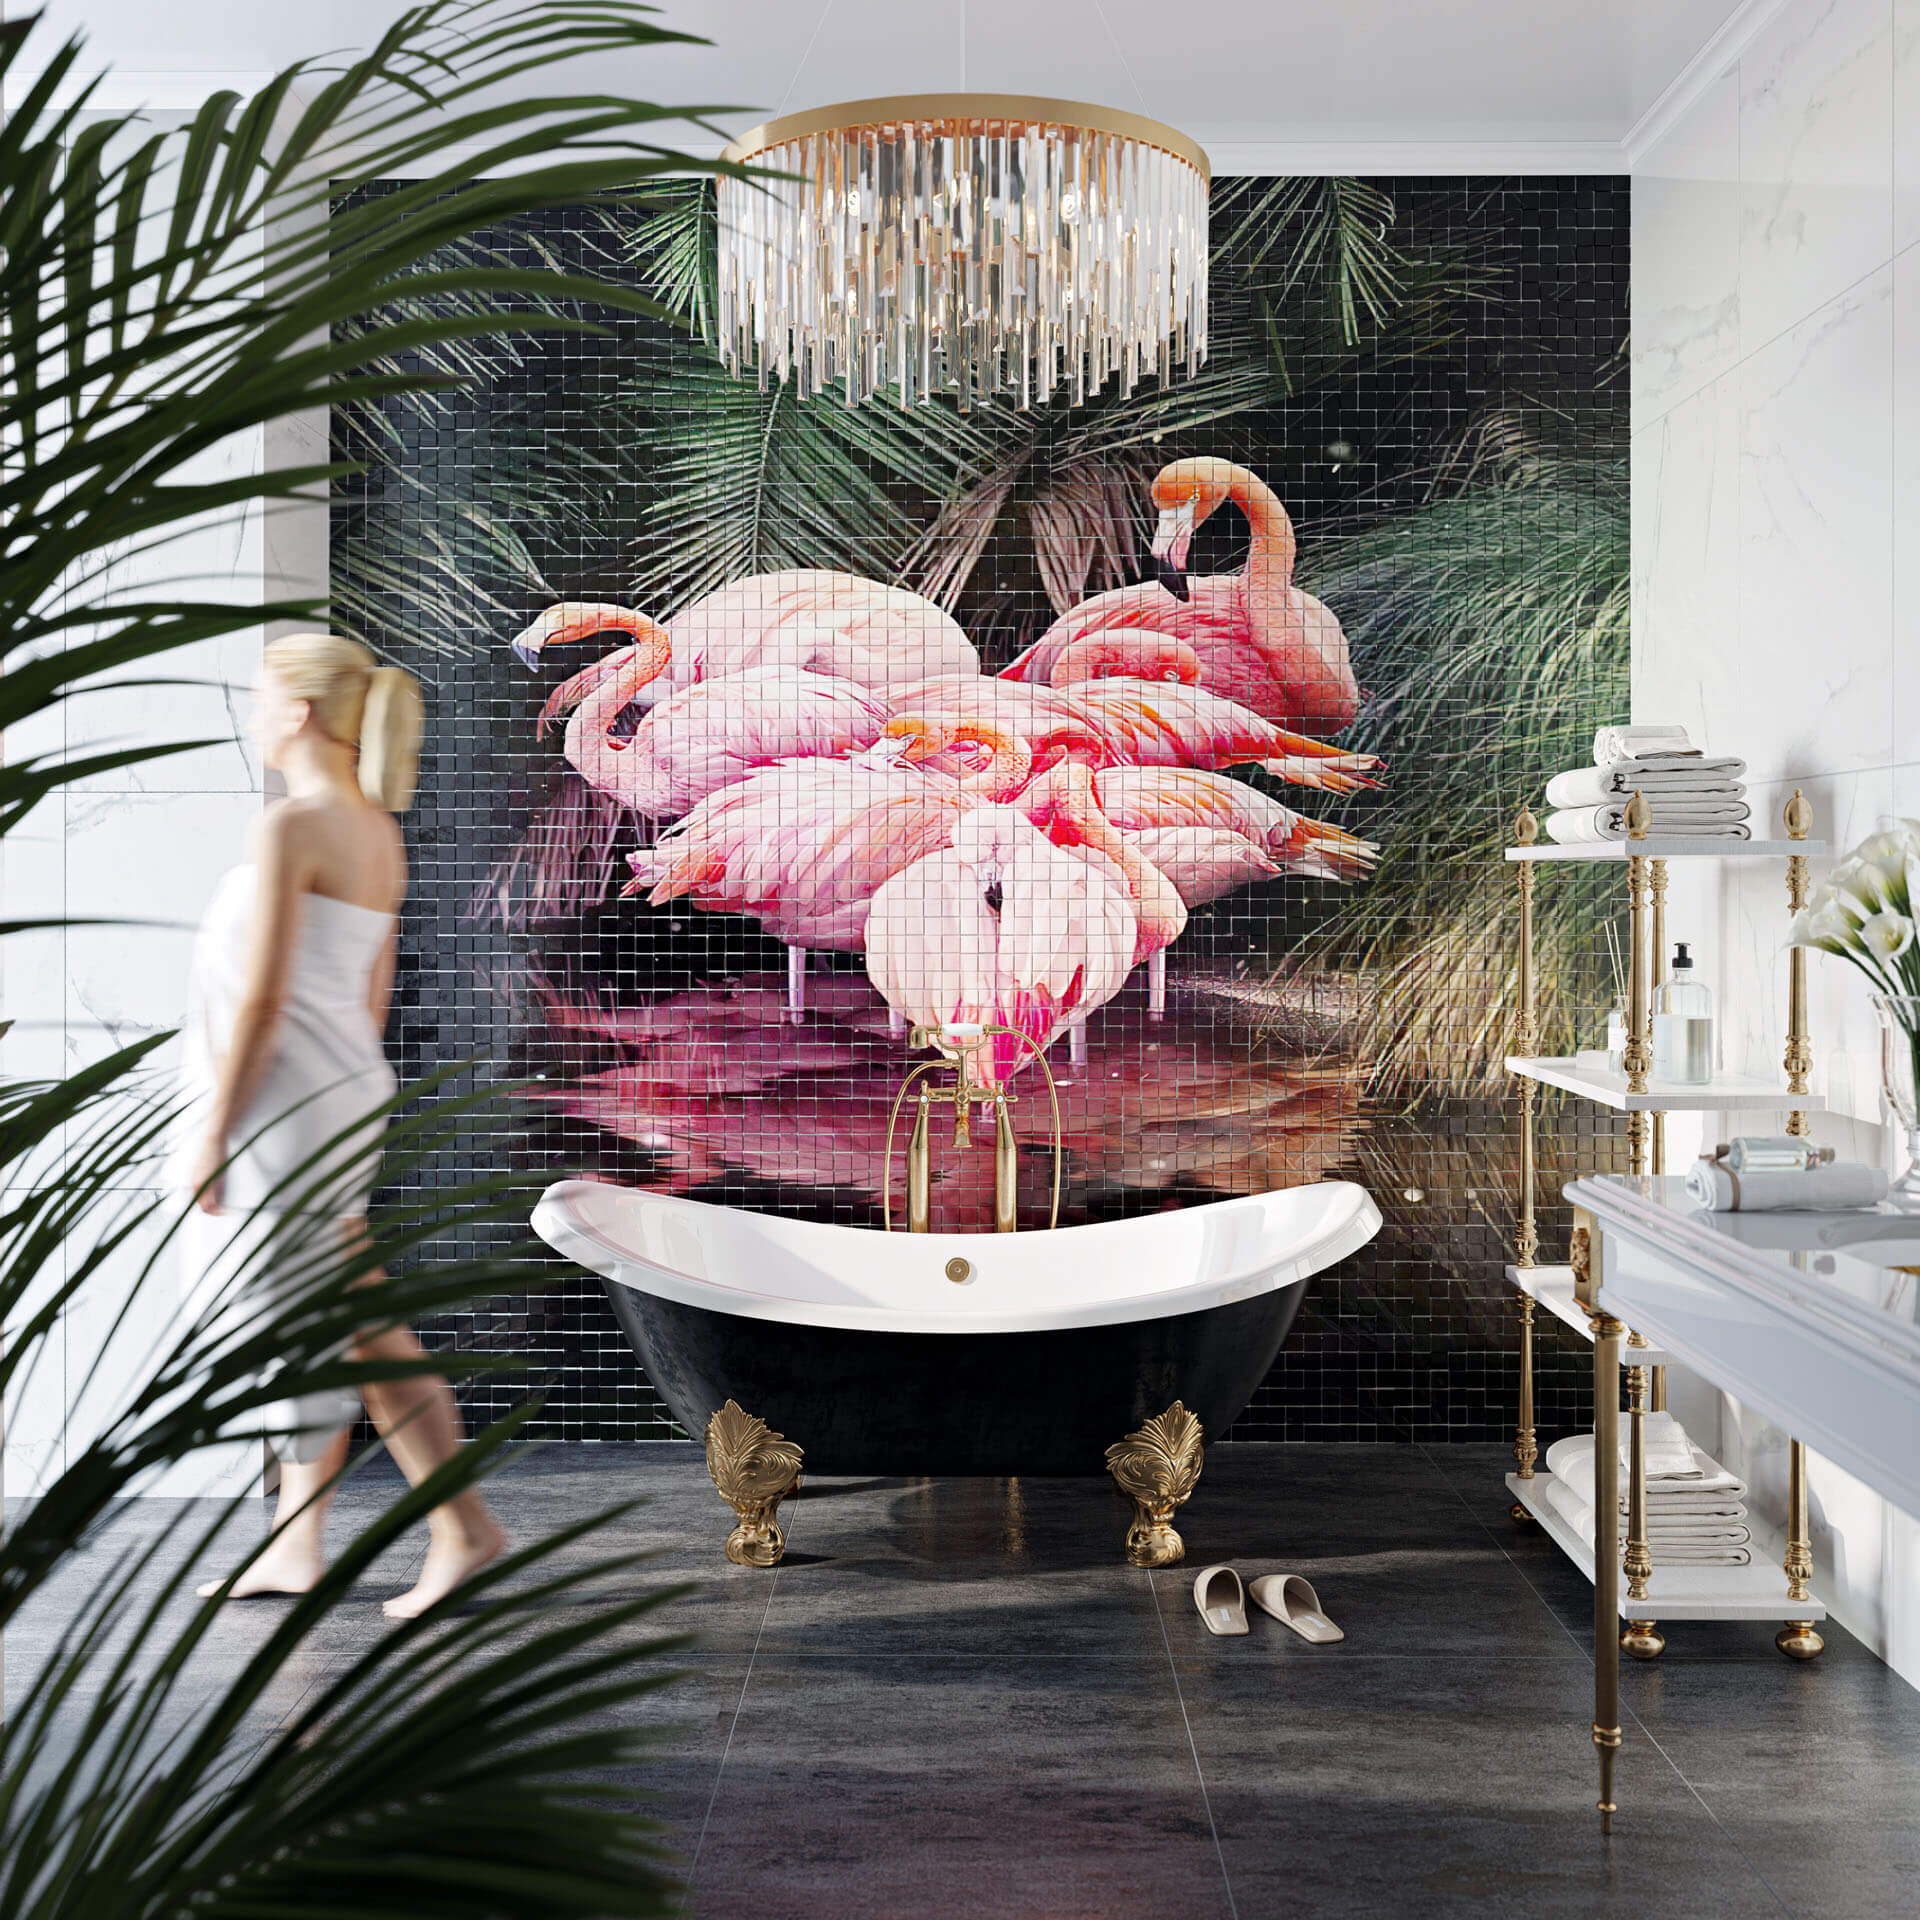 3D Visualization of Stunning Bathroom Mosaic Art